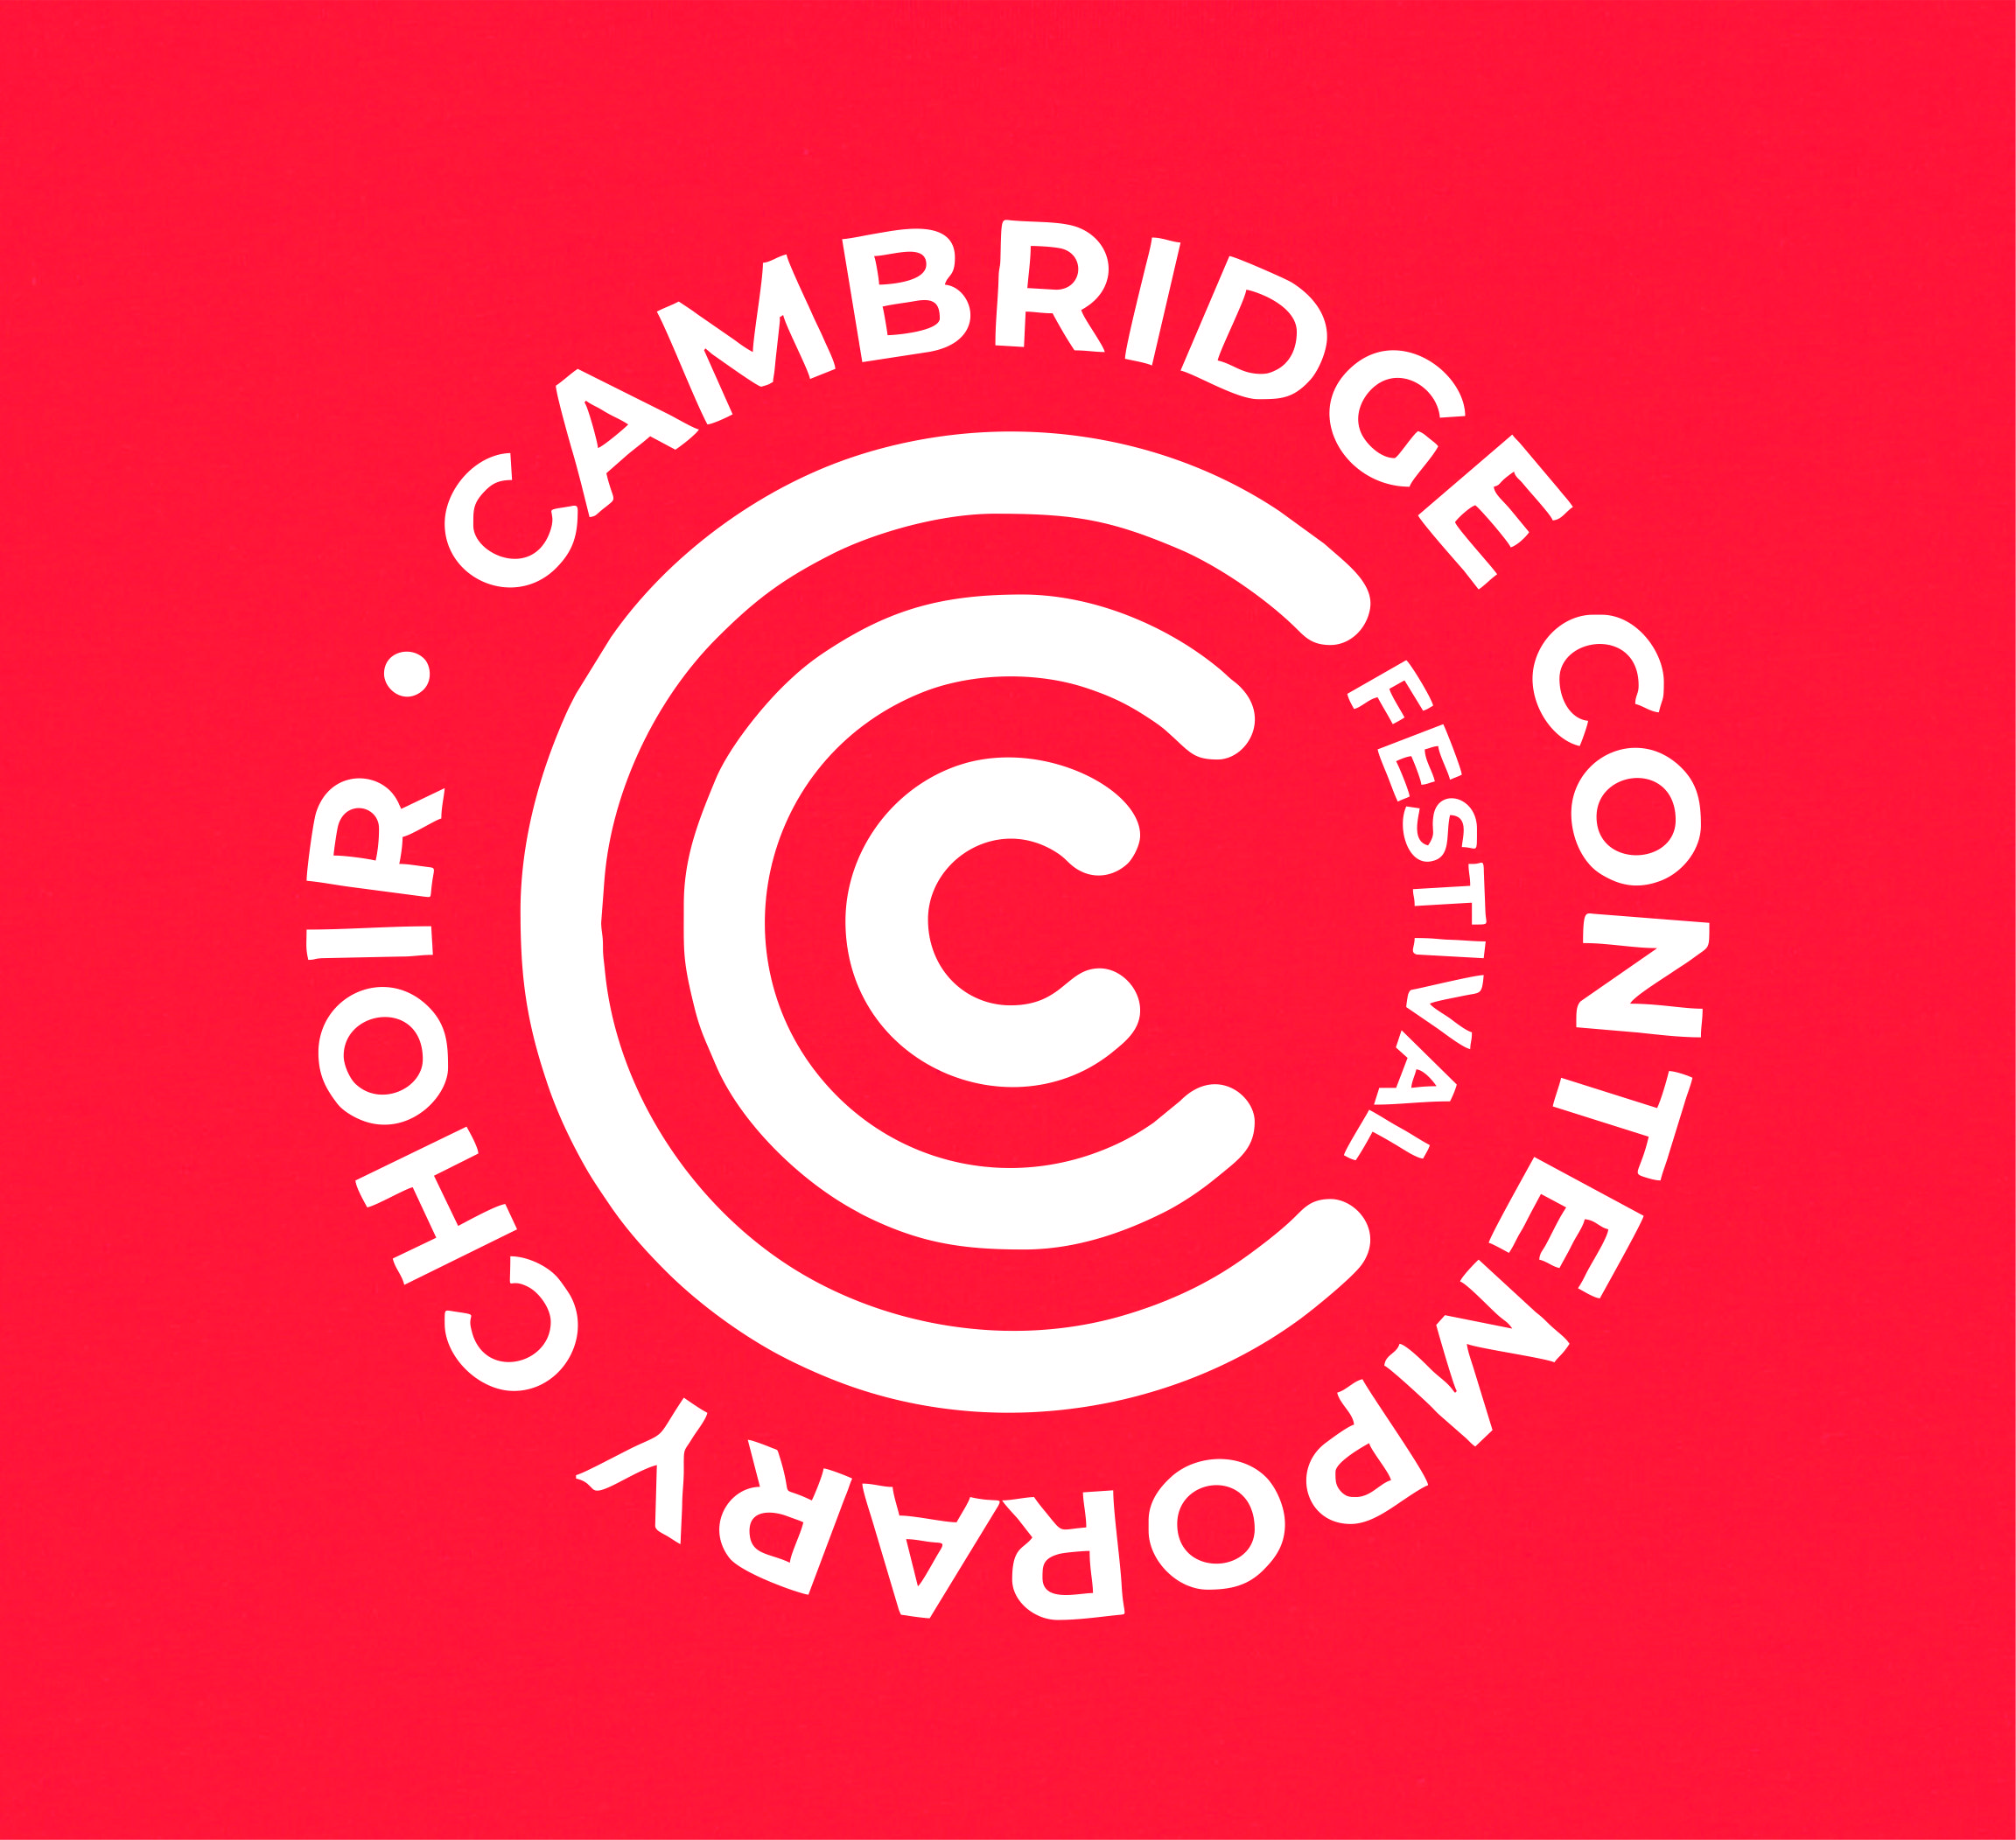 Cambridge Contemporary Choir Festival Merchandise